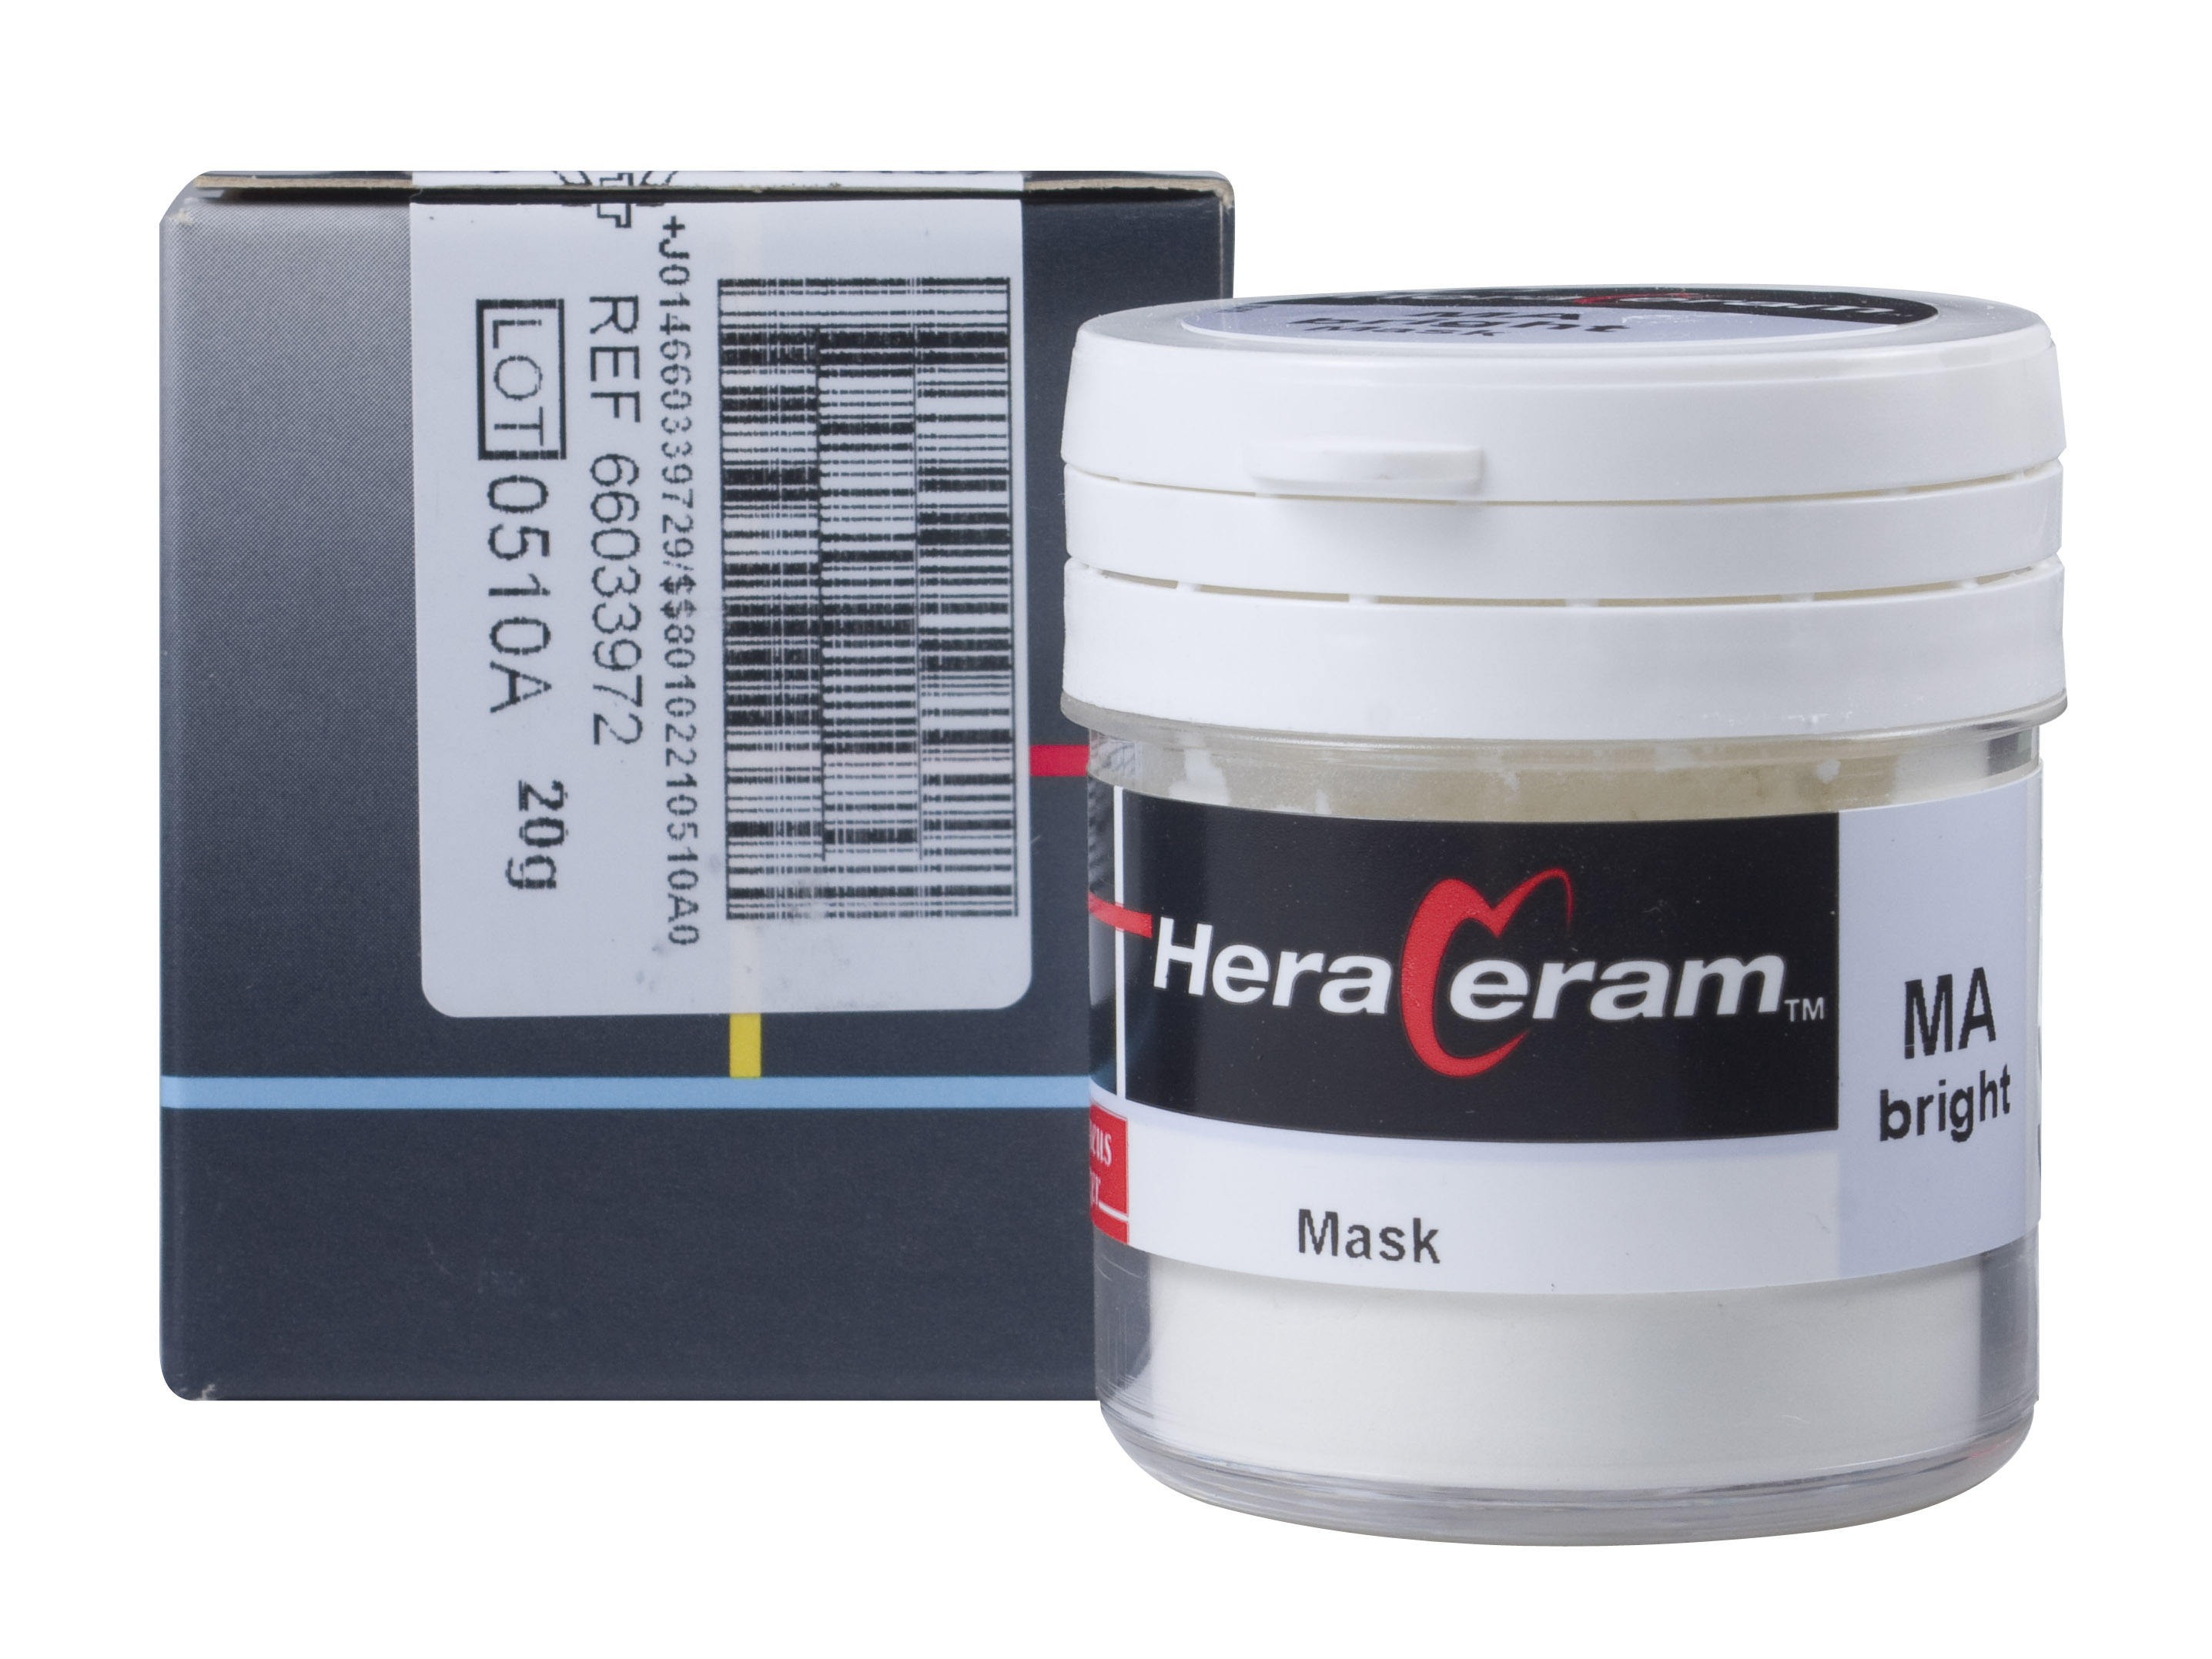 Маска HeraCeram Mask MA bright